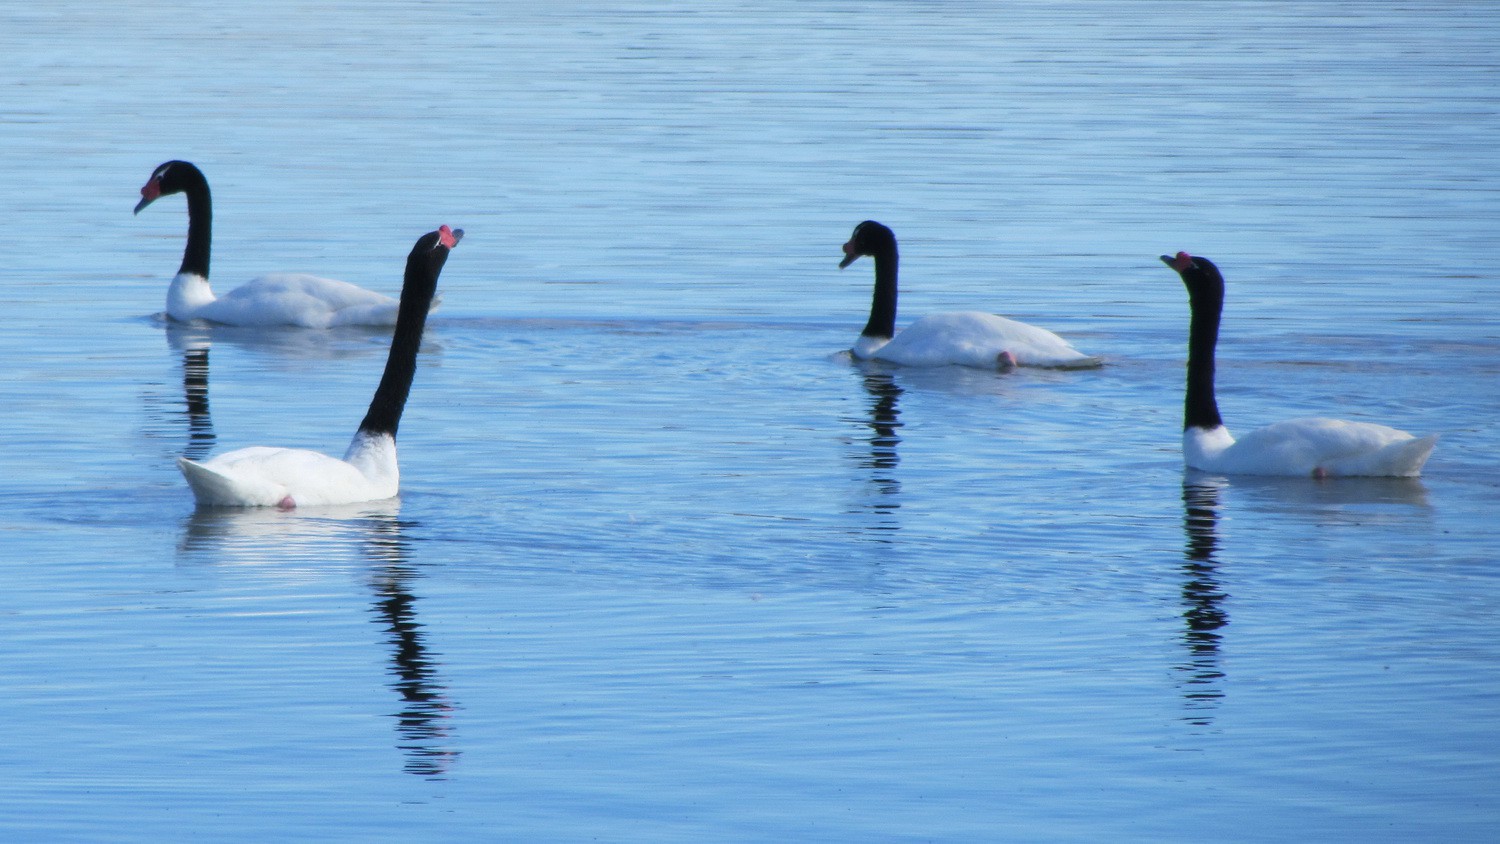 Black neck Swans